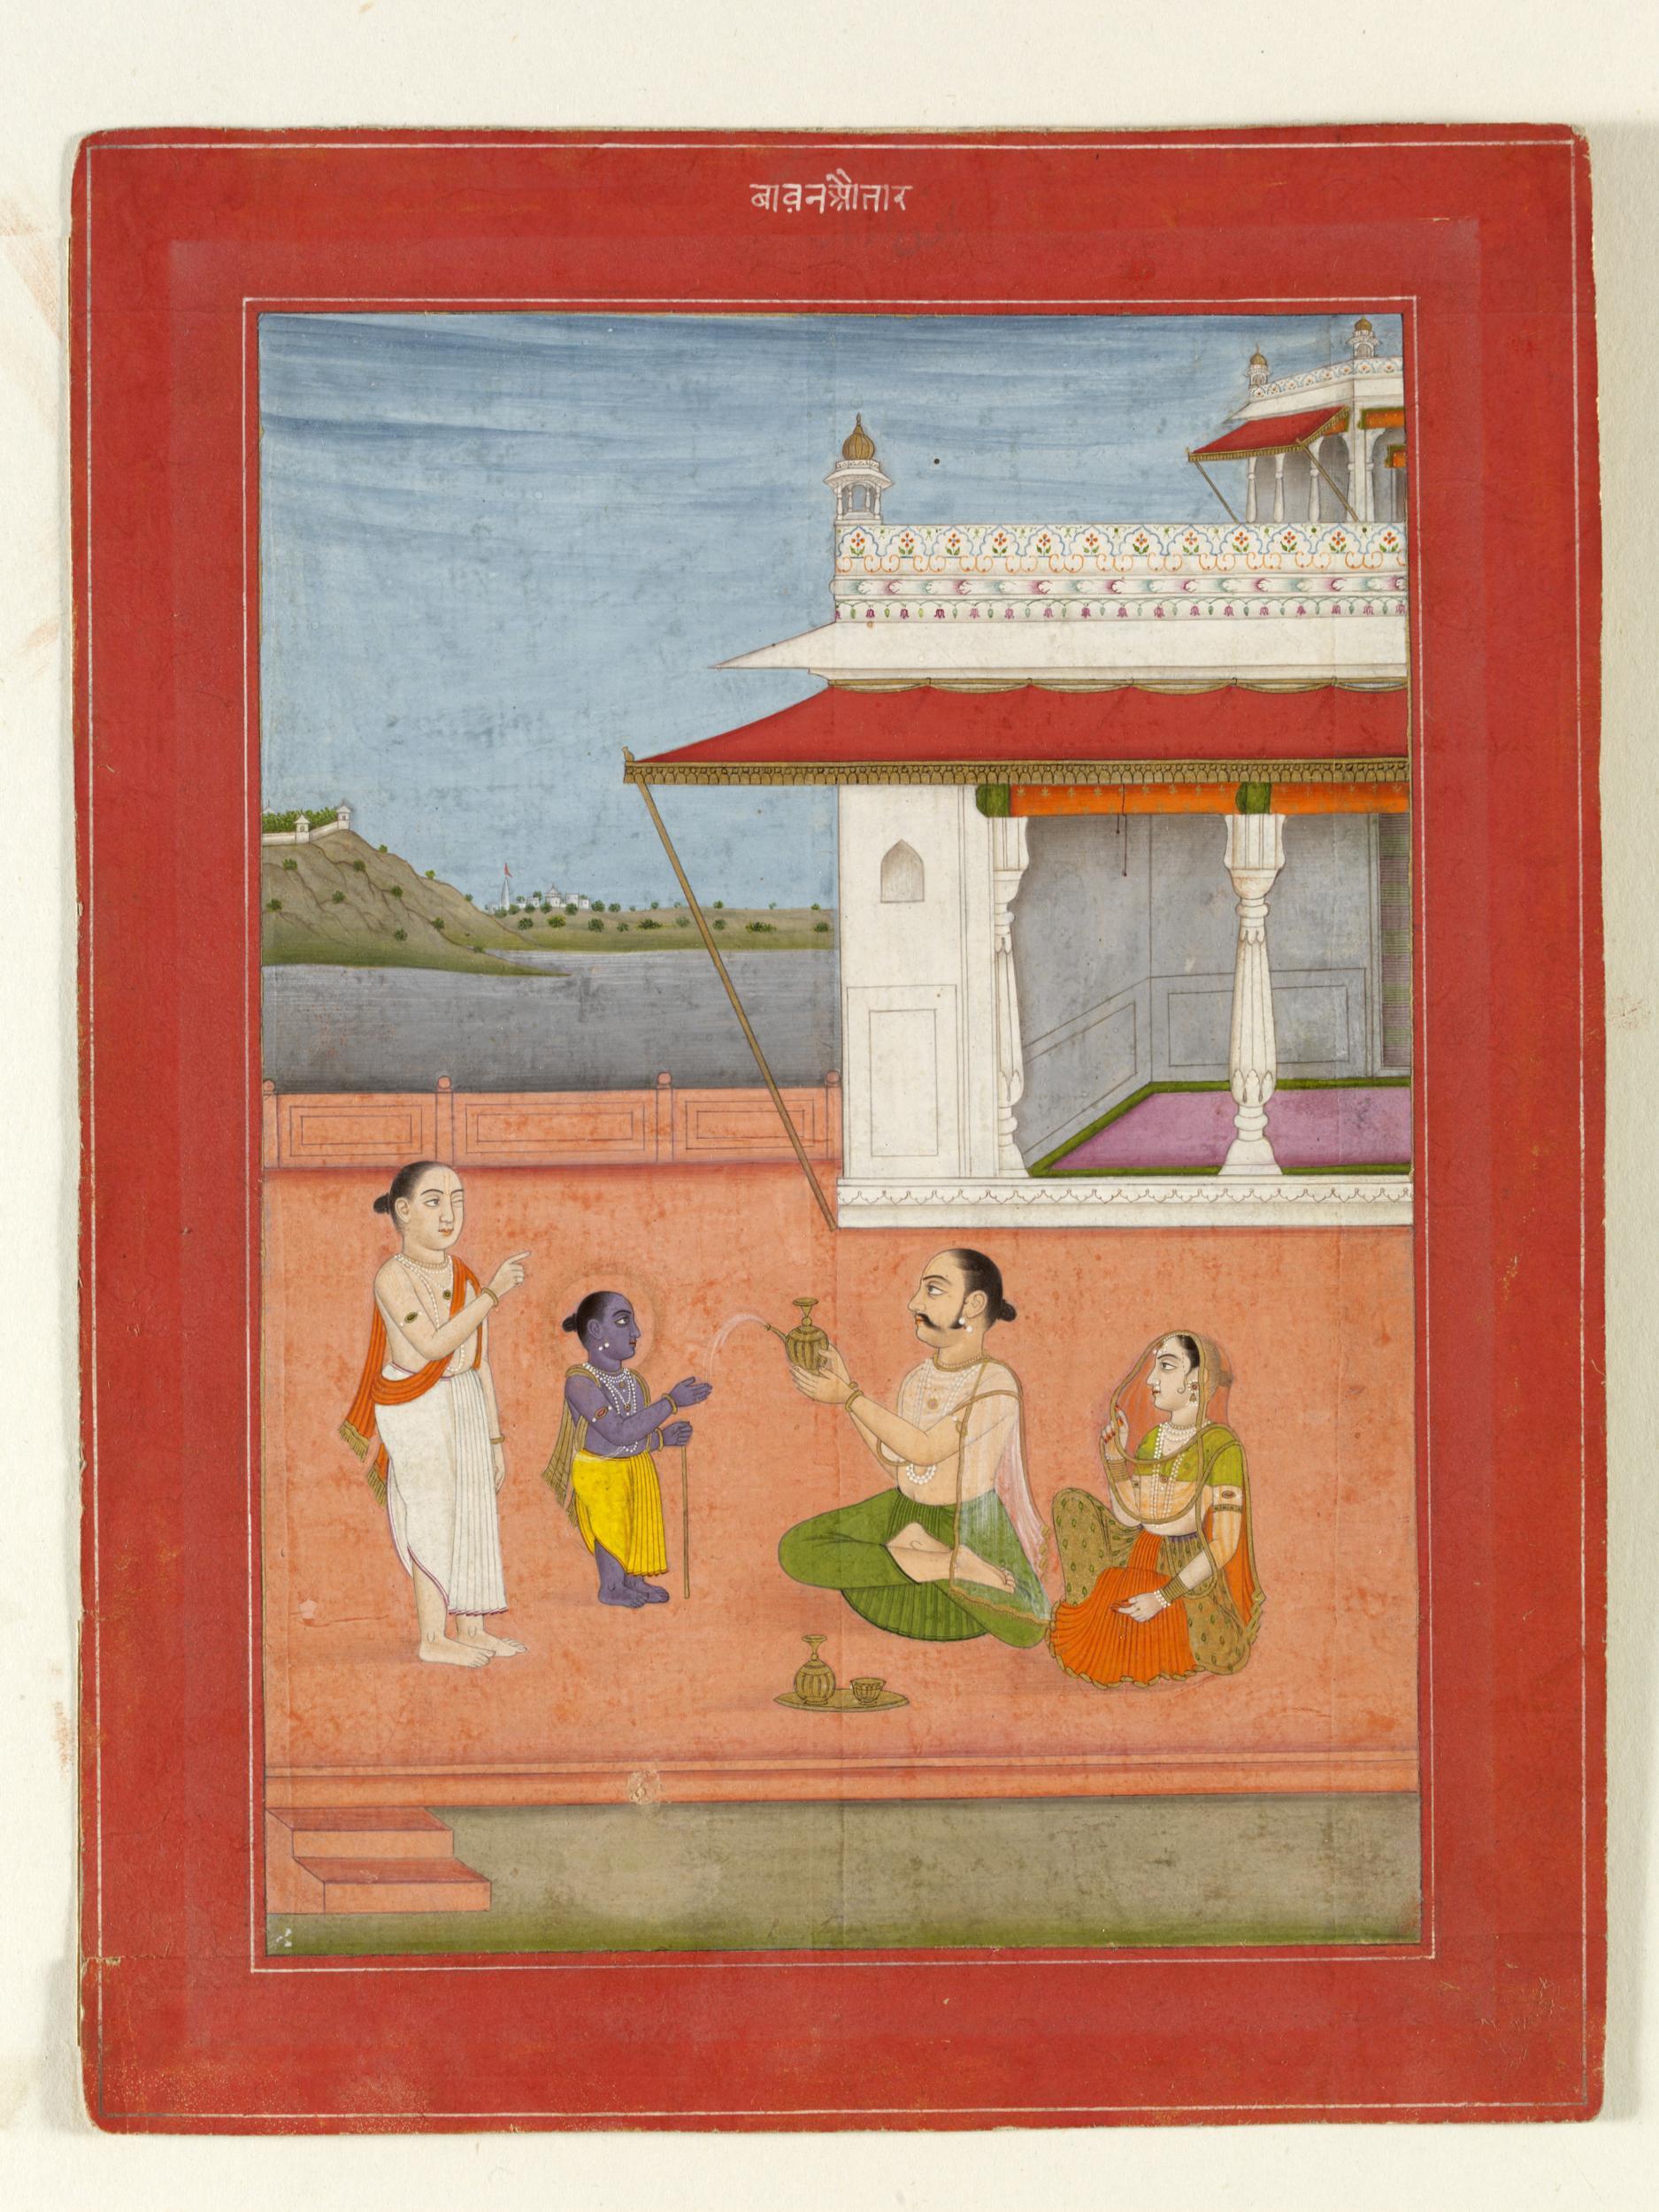 Vamana, ca. 19th century, Rajasthan, India, Victoria & Albert Museum, London, UK.